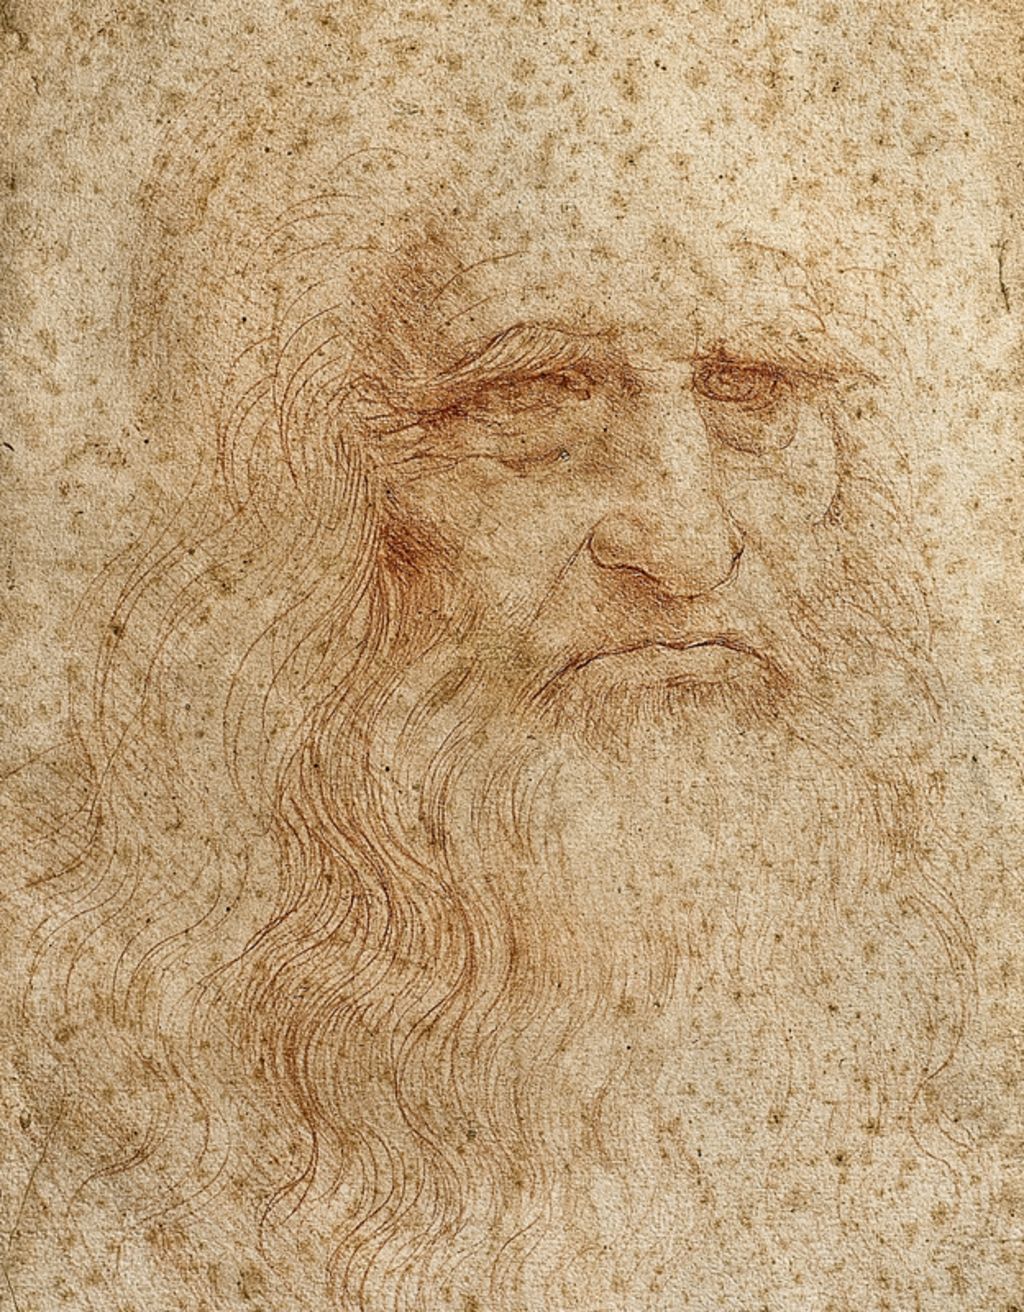 The Leonardo hidden from Hitler in case it gave him magic powers - BBC News